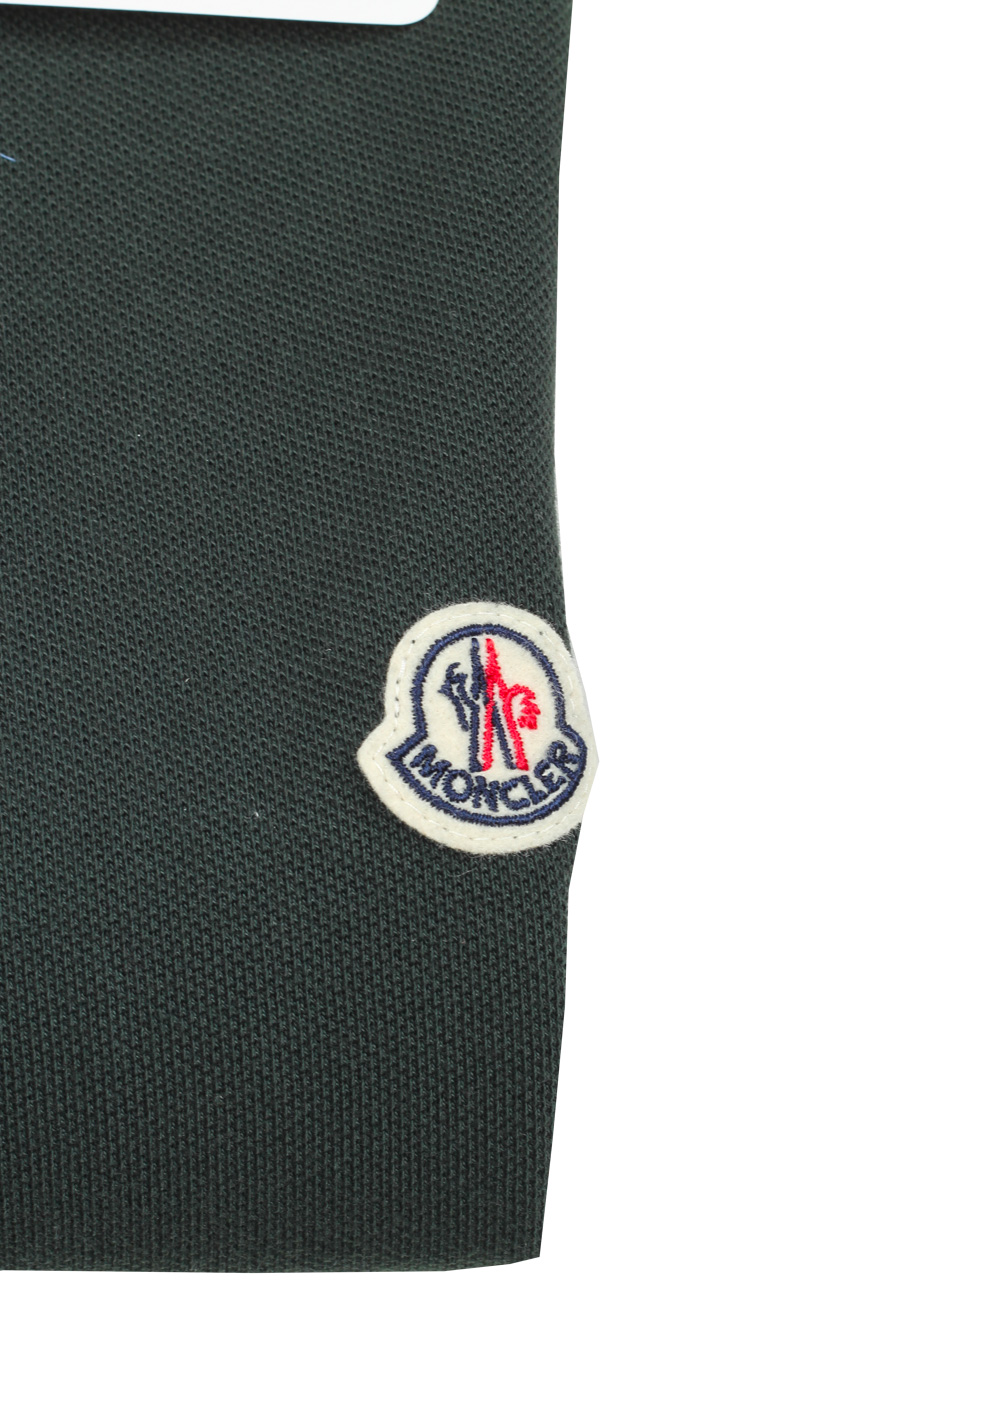 Moncler Green Long Sleeve Polo Shirt Size XXL / 44R U.S. | Costume Limité